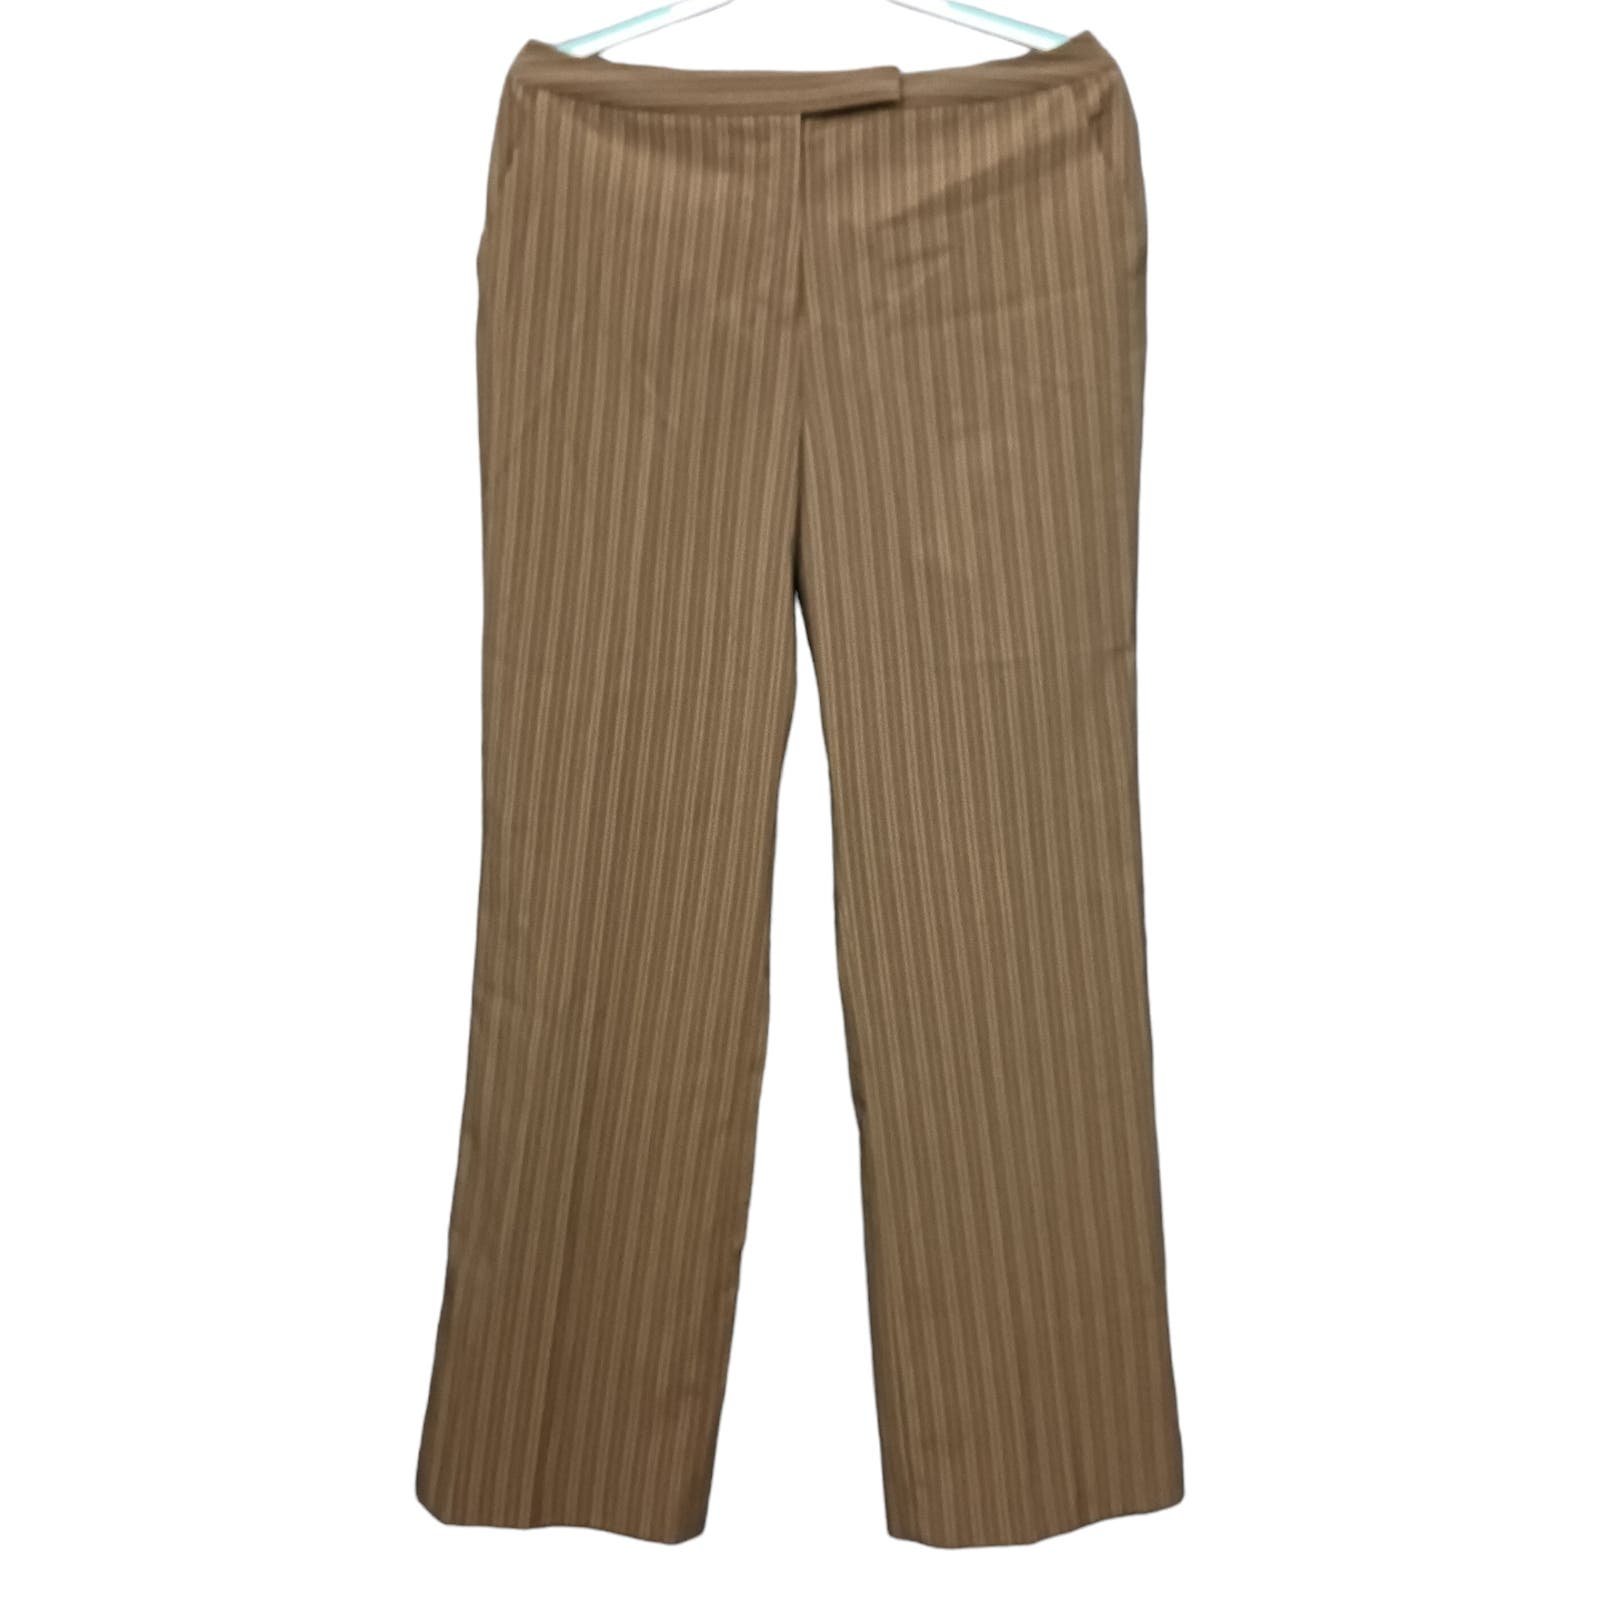 East 5th Pants Womens 12 Dress Trousers Brown Stripes Classic Fit JYQShoRrl